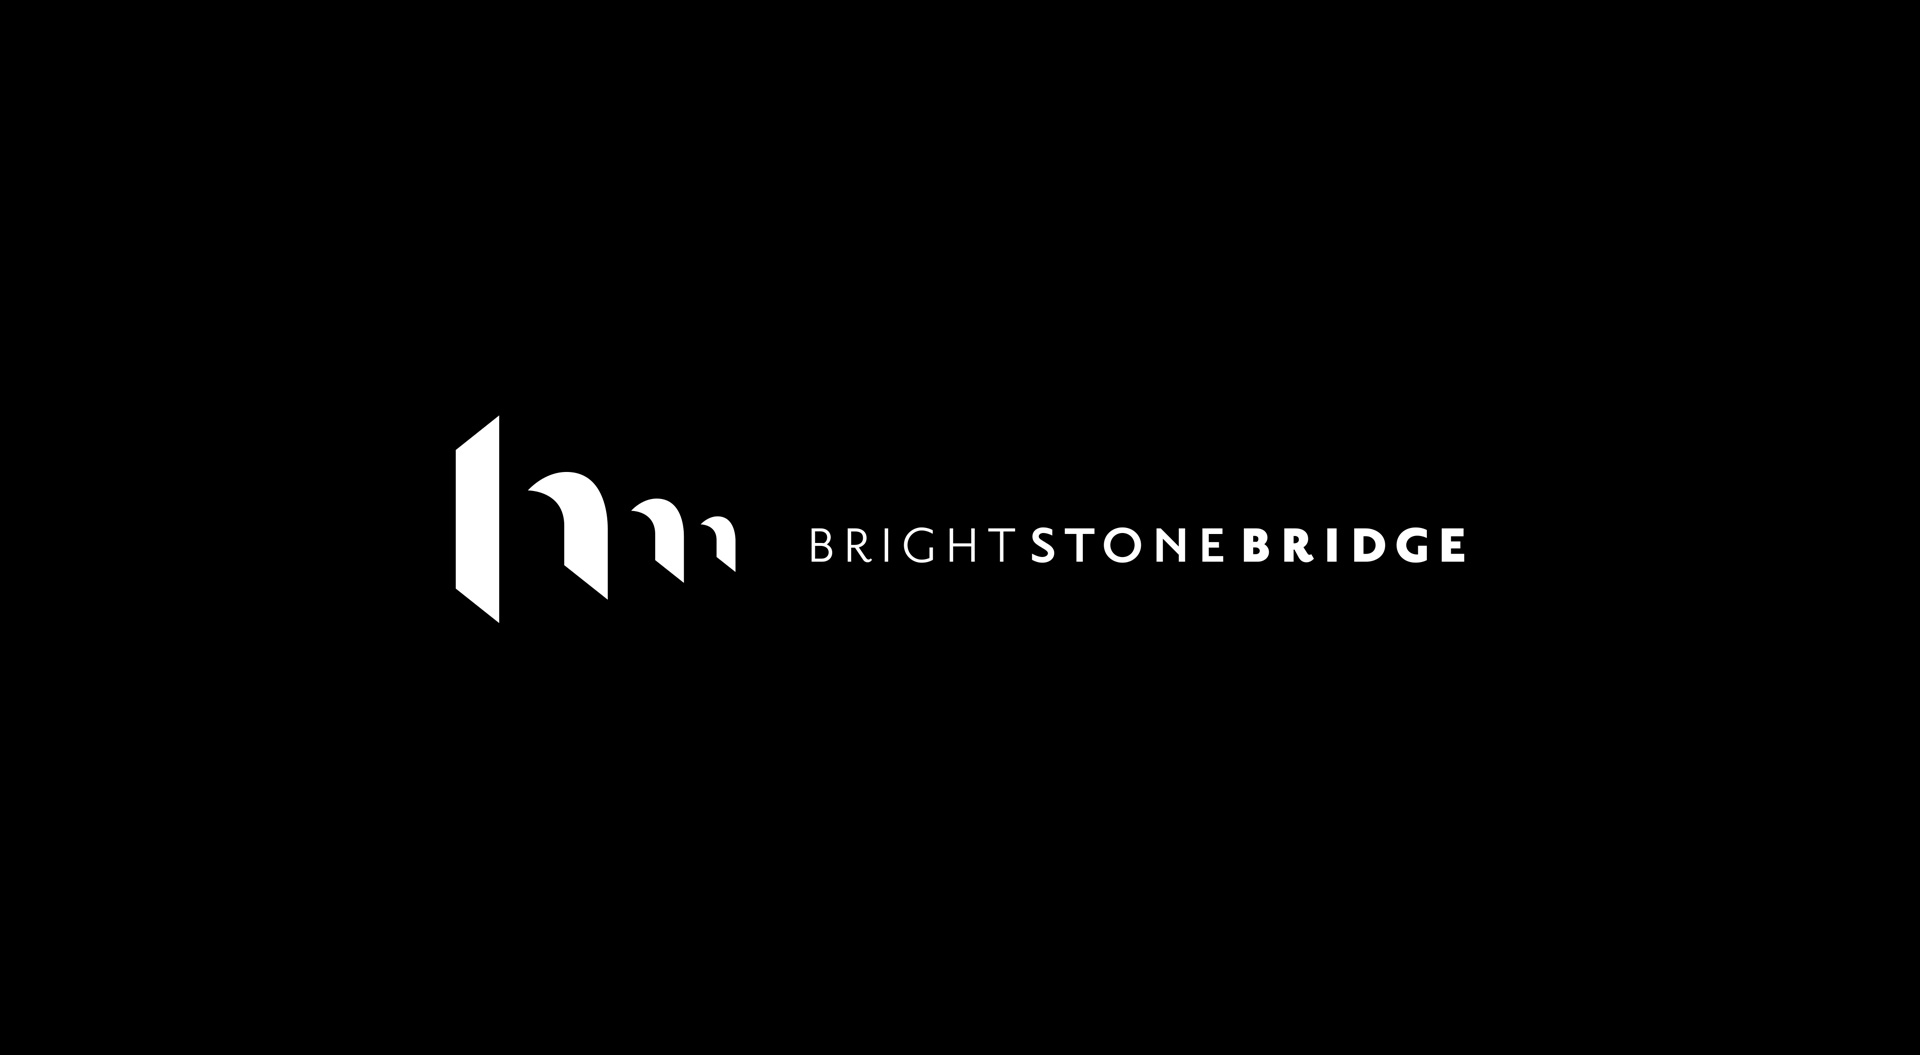 Brightstonebridge logo wide